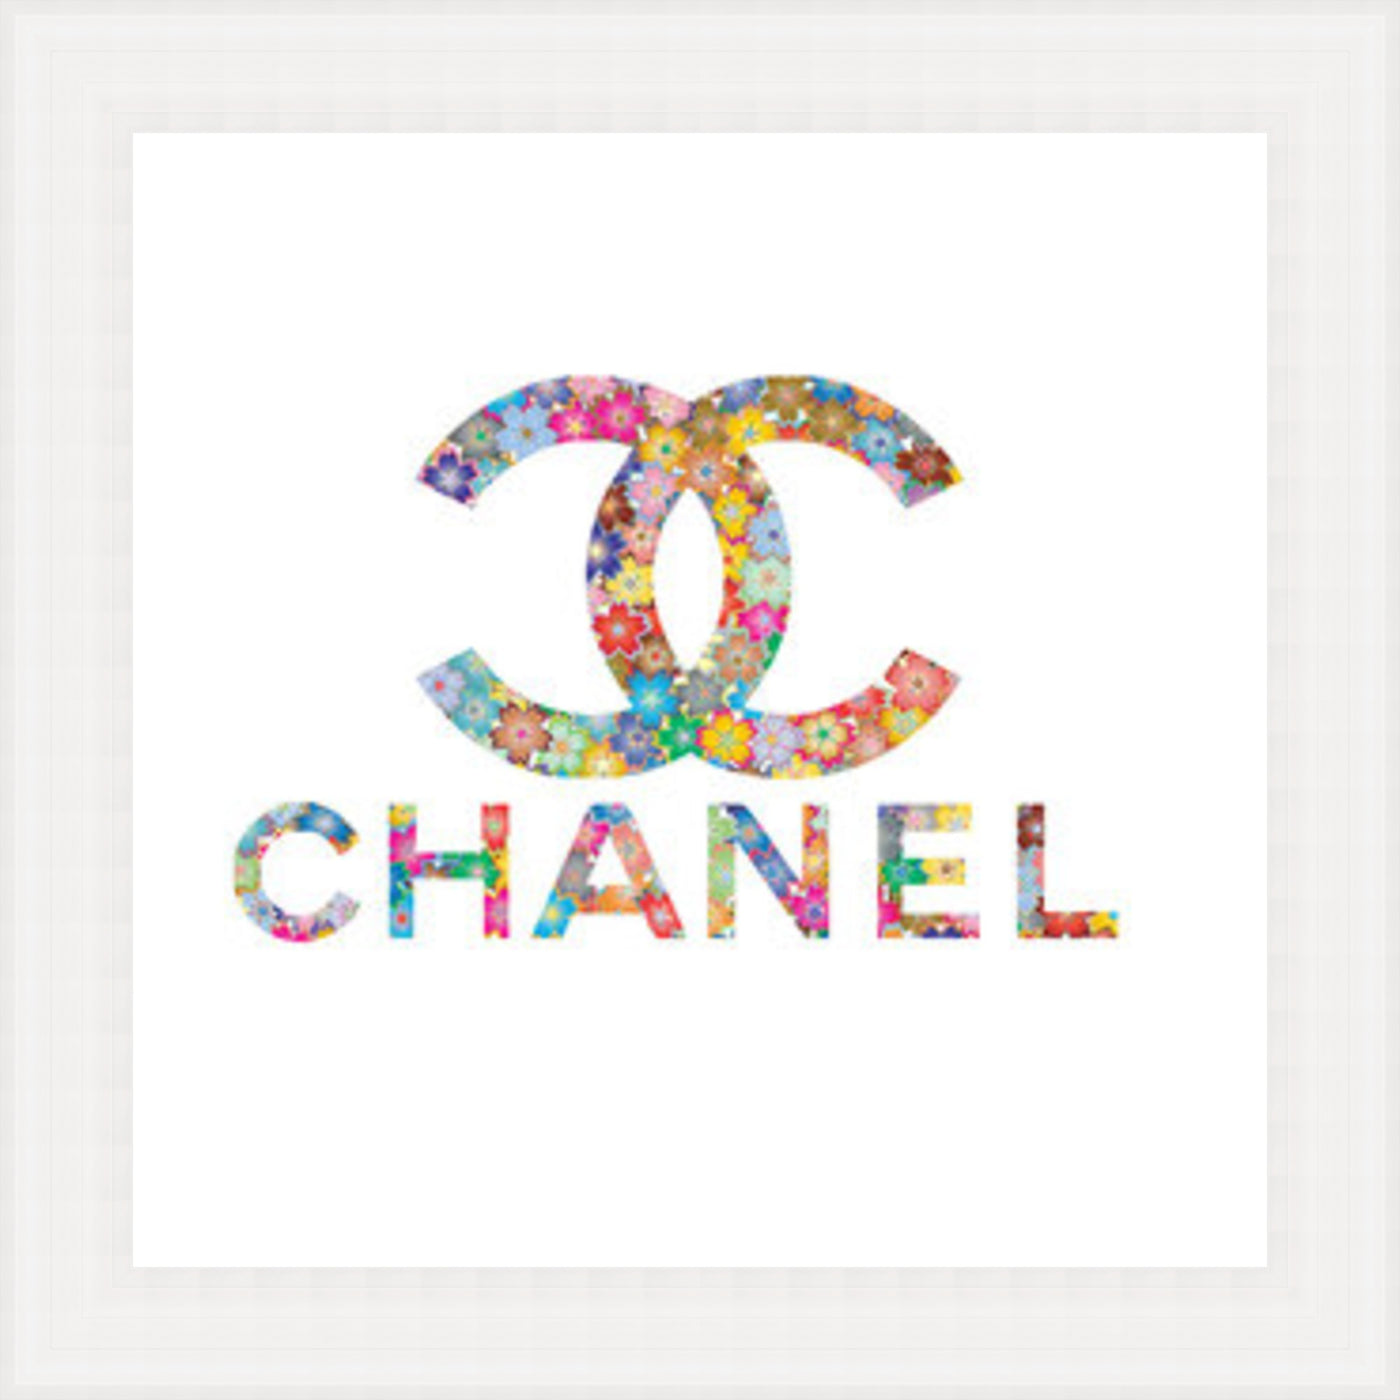 Chanel Collage Art Print  Here On Lake Huron